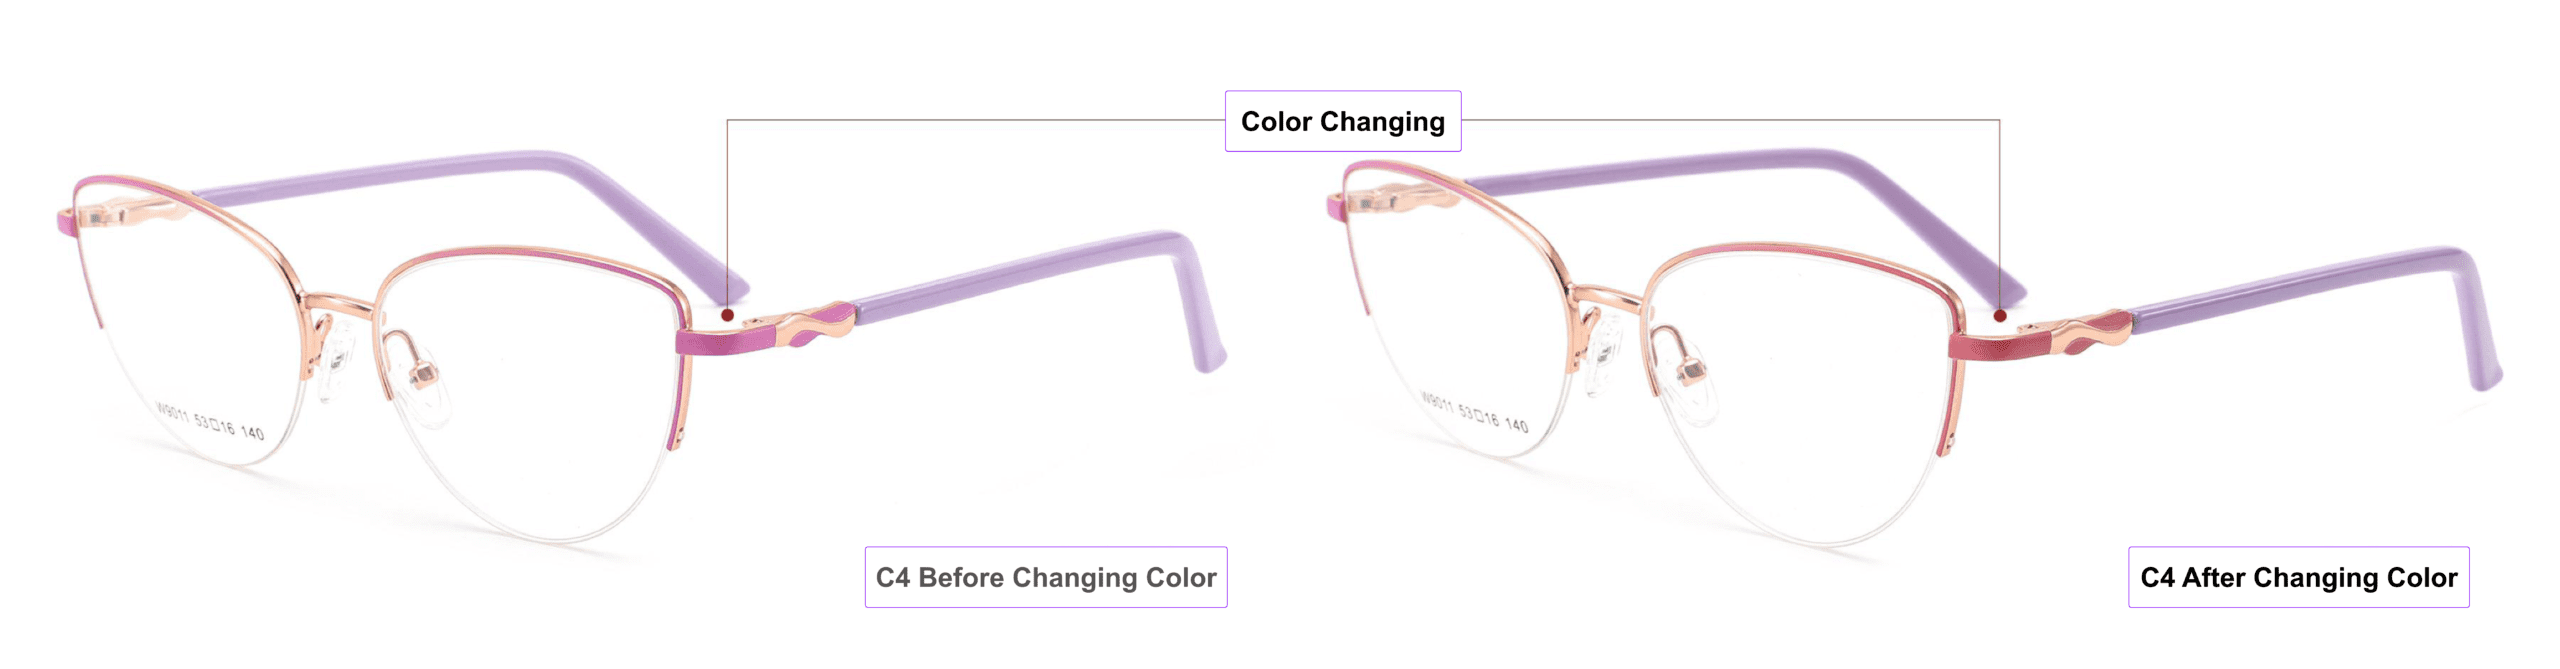 color changing glasses frames, petal pink,mist violet, Indian red, China glasses manufacturer, process of color changing, eyeglass accessories